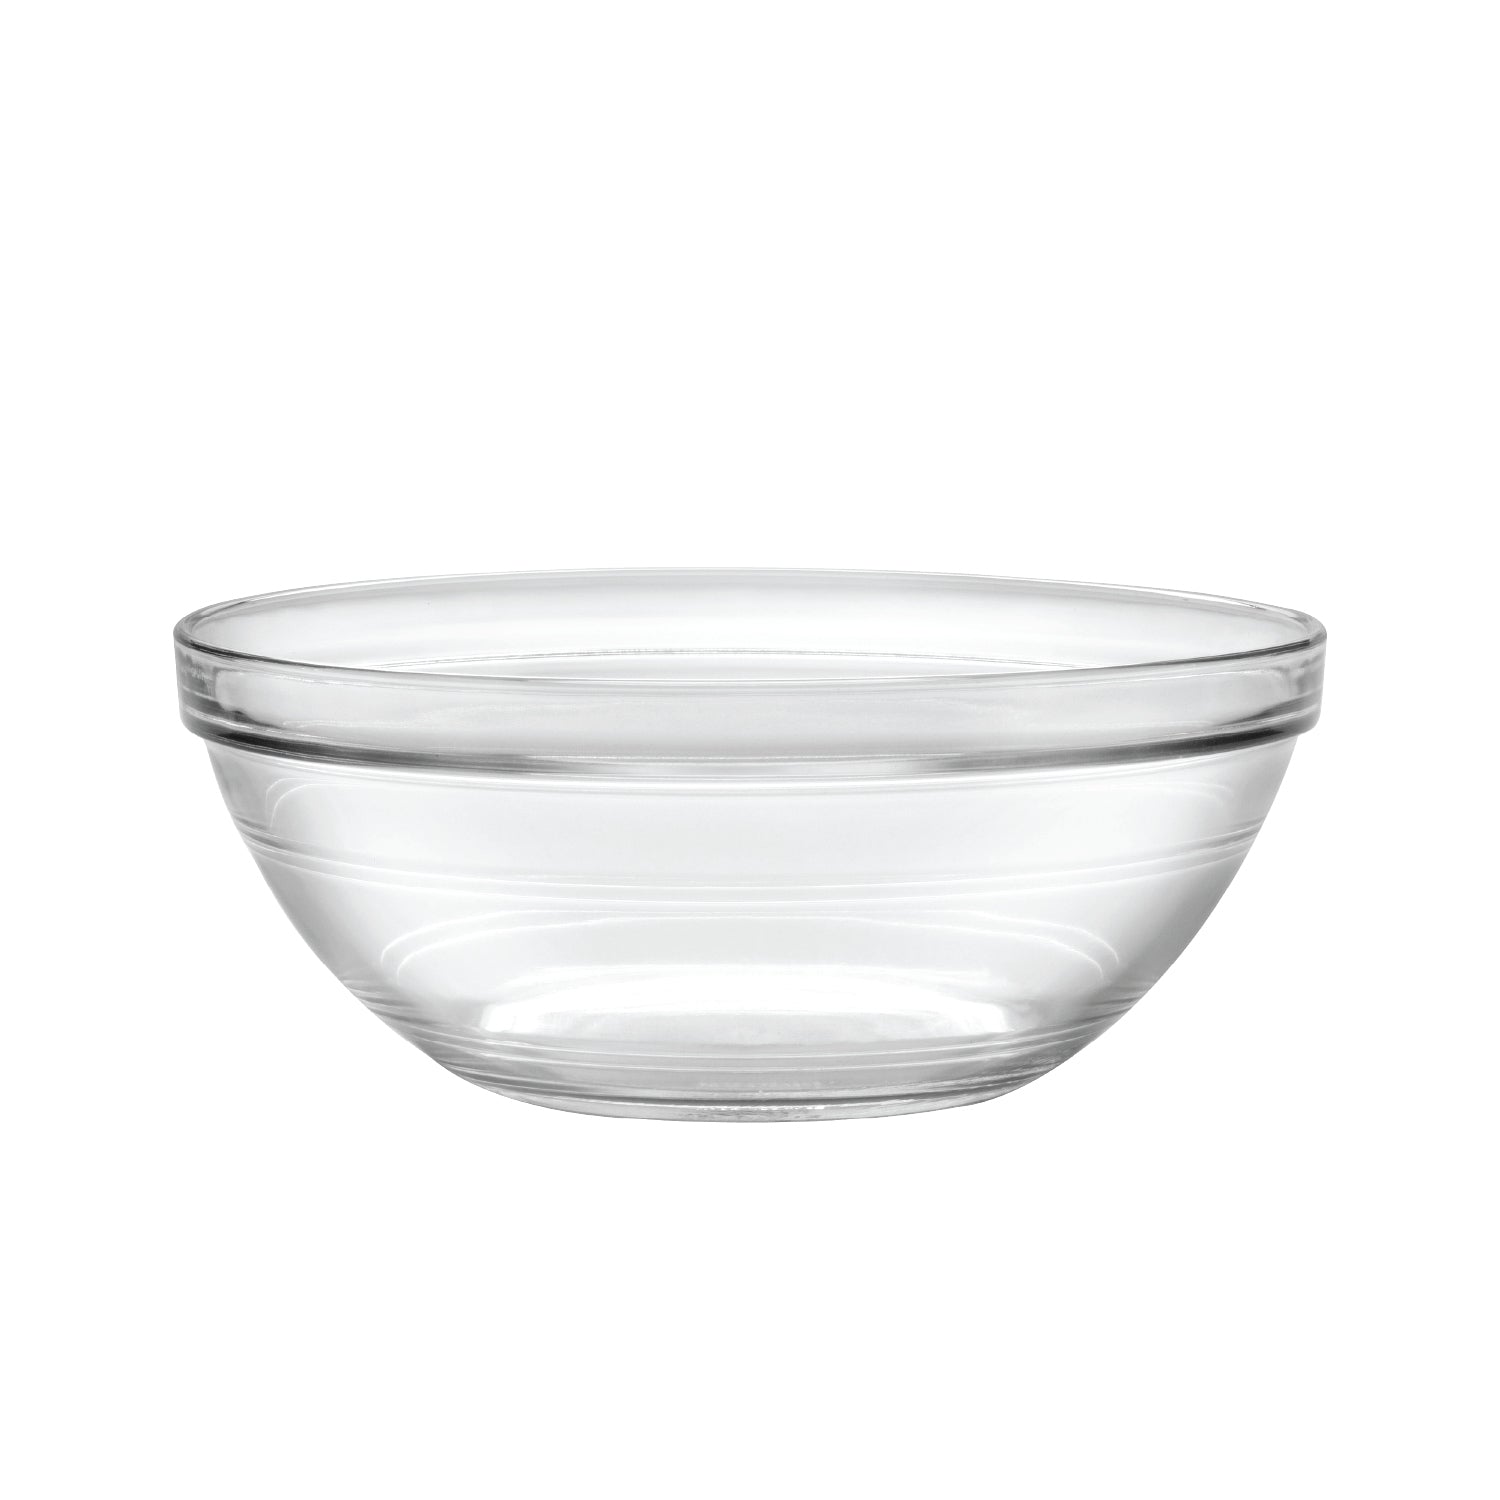 Clear Borosilicate Binaural Glass Bowl with Lid Large Capacity